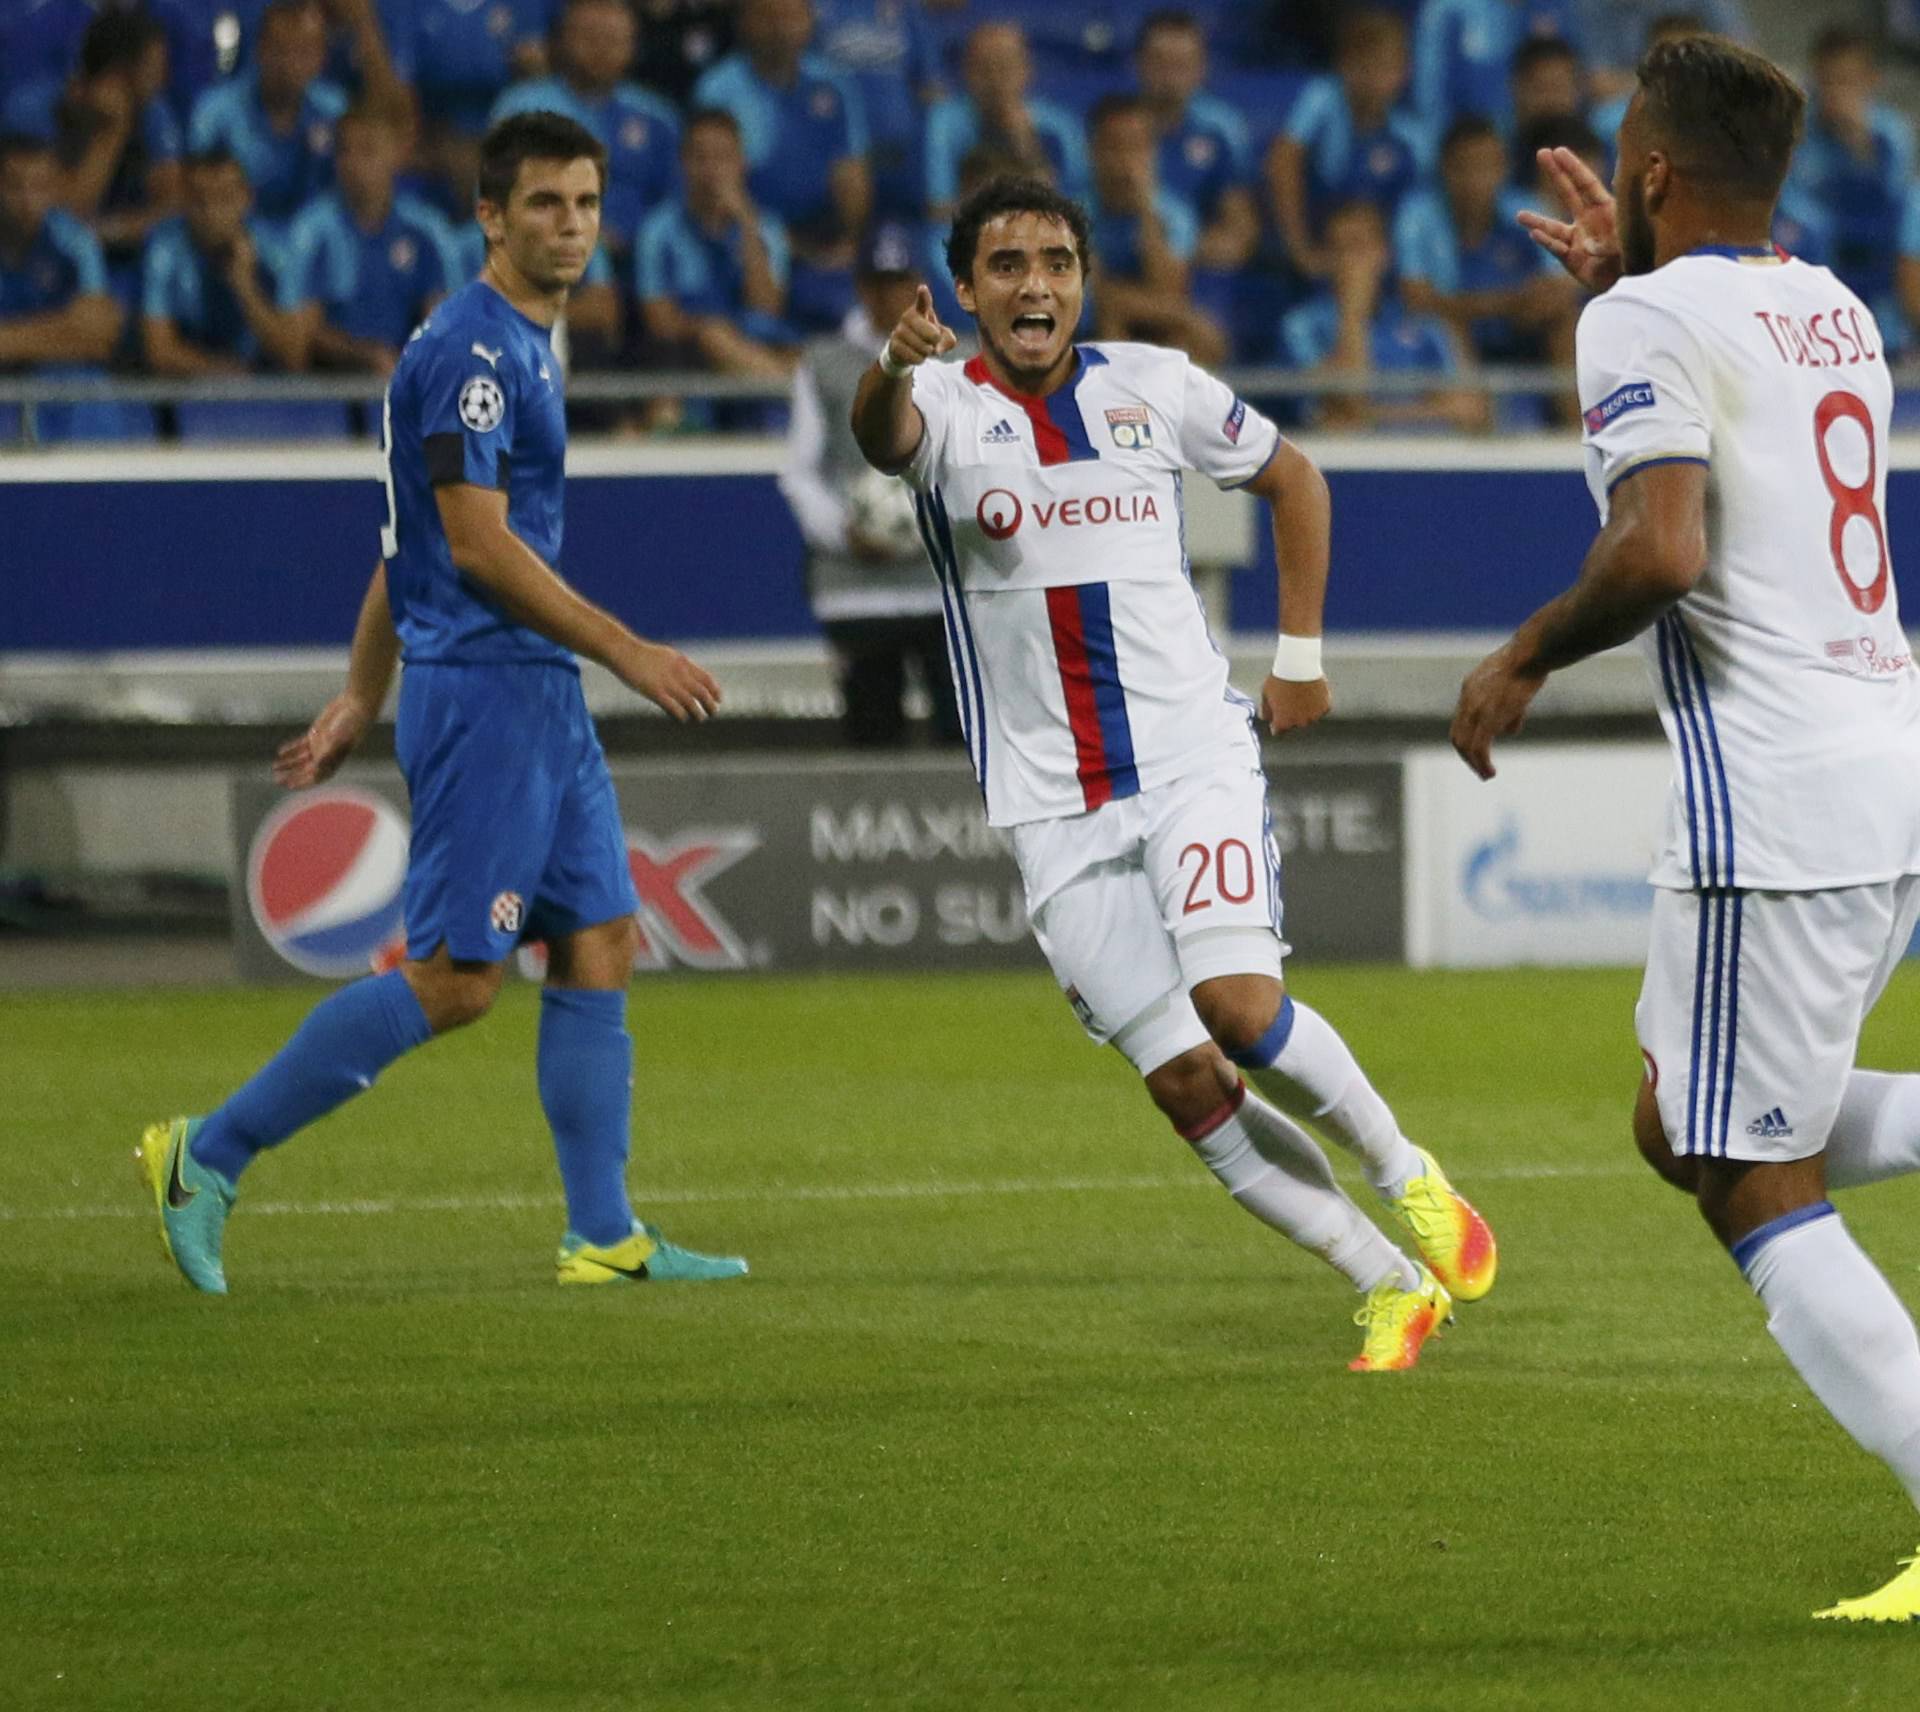 Olympique Lyon's Corentin Tolisso celebrates after scoring against Dinamo Zagreb